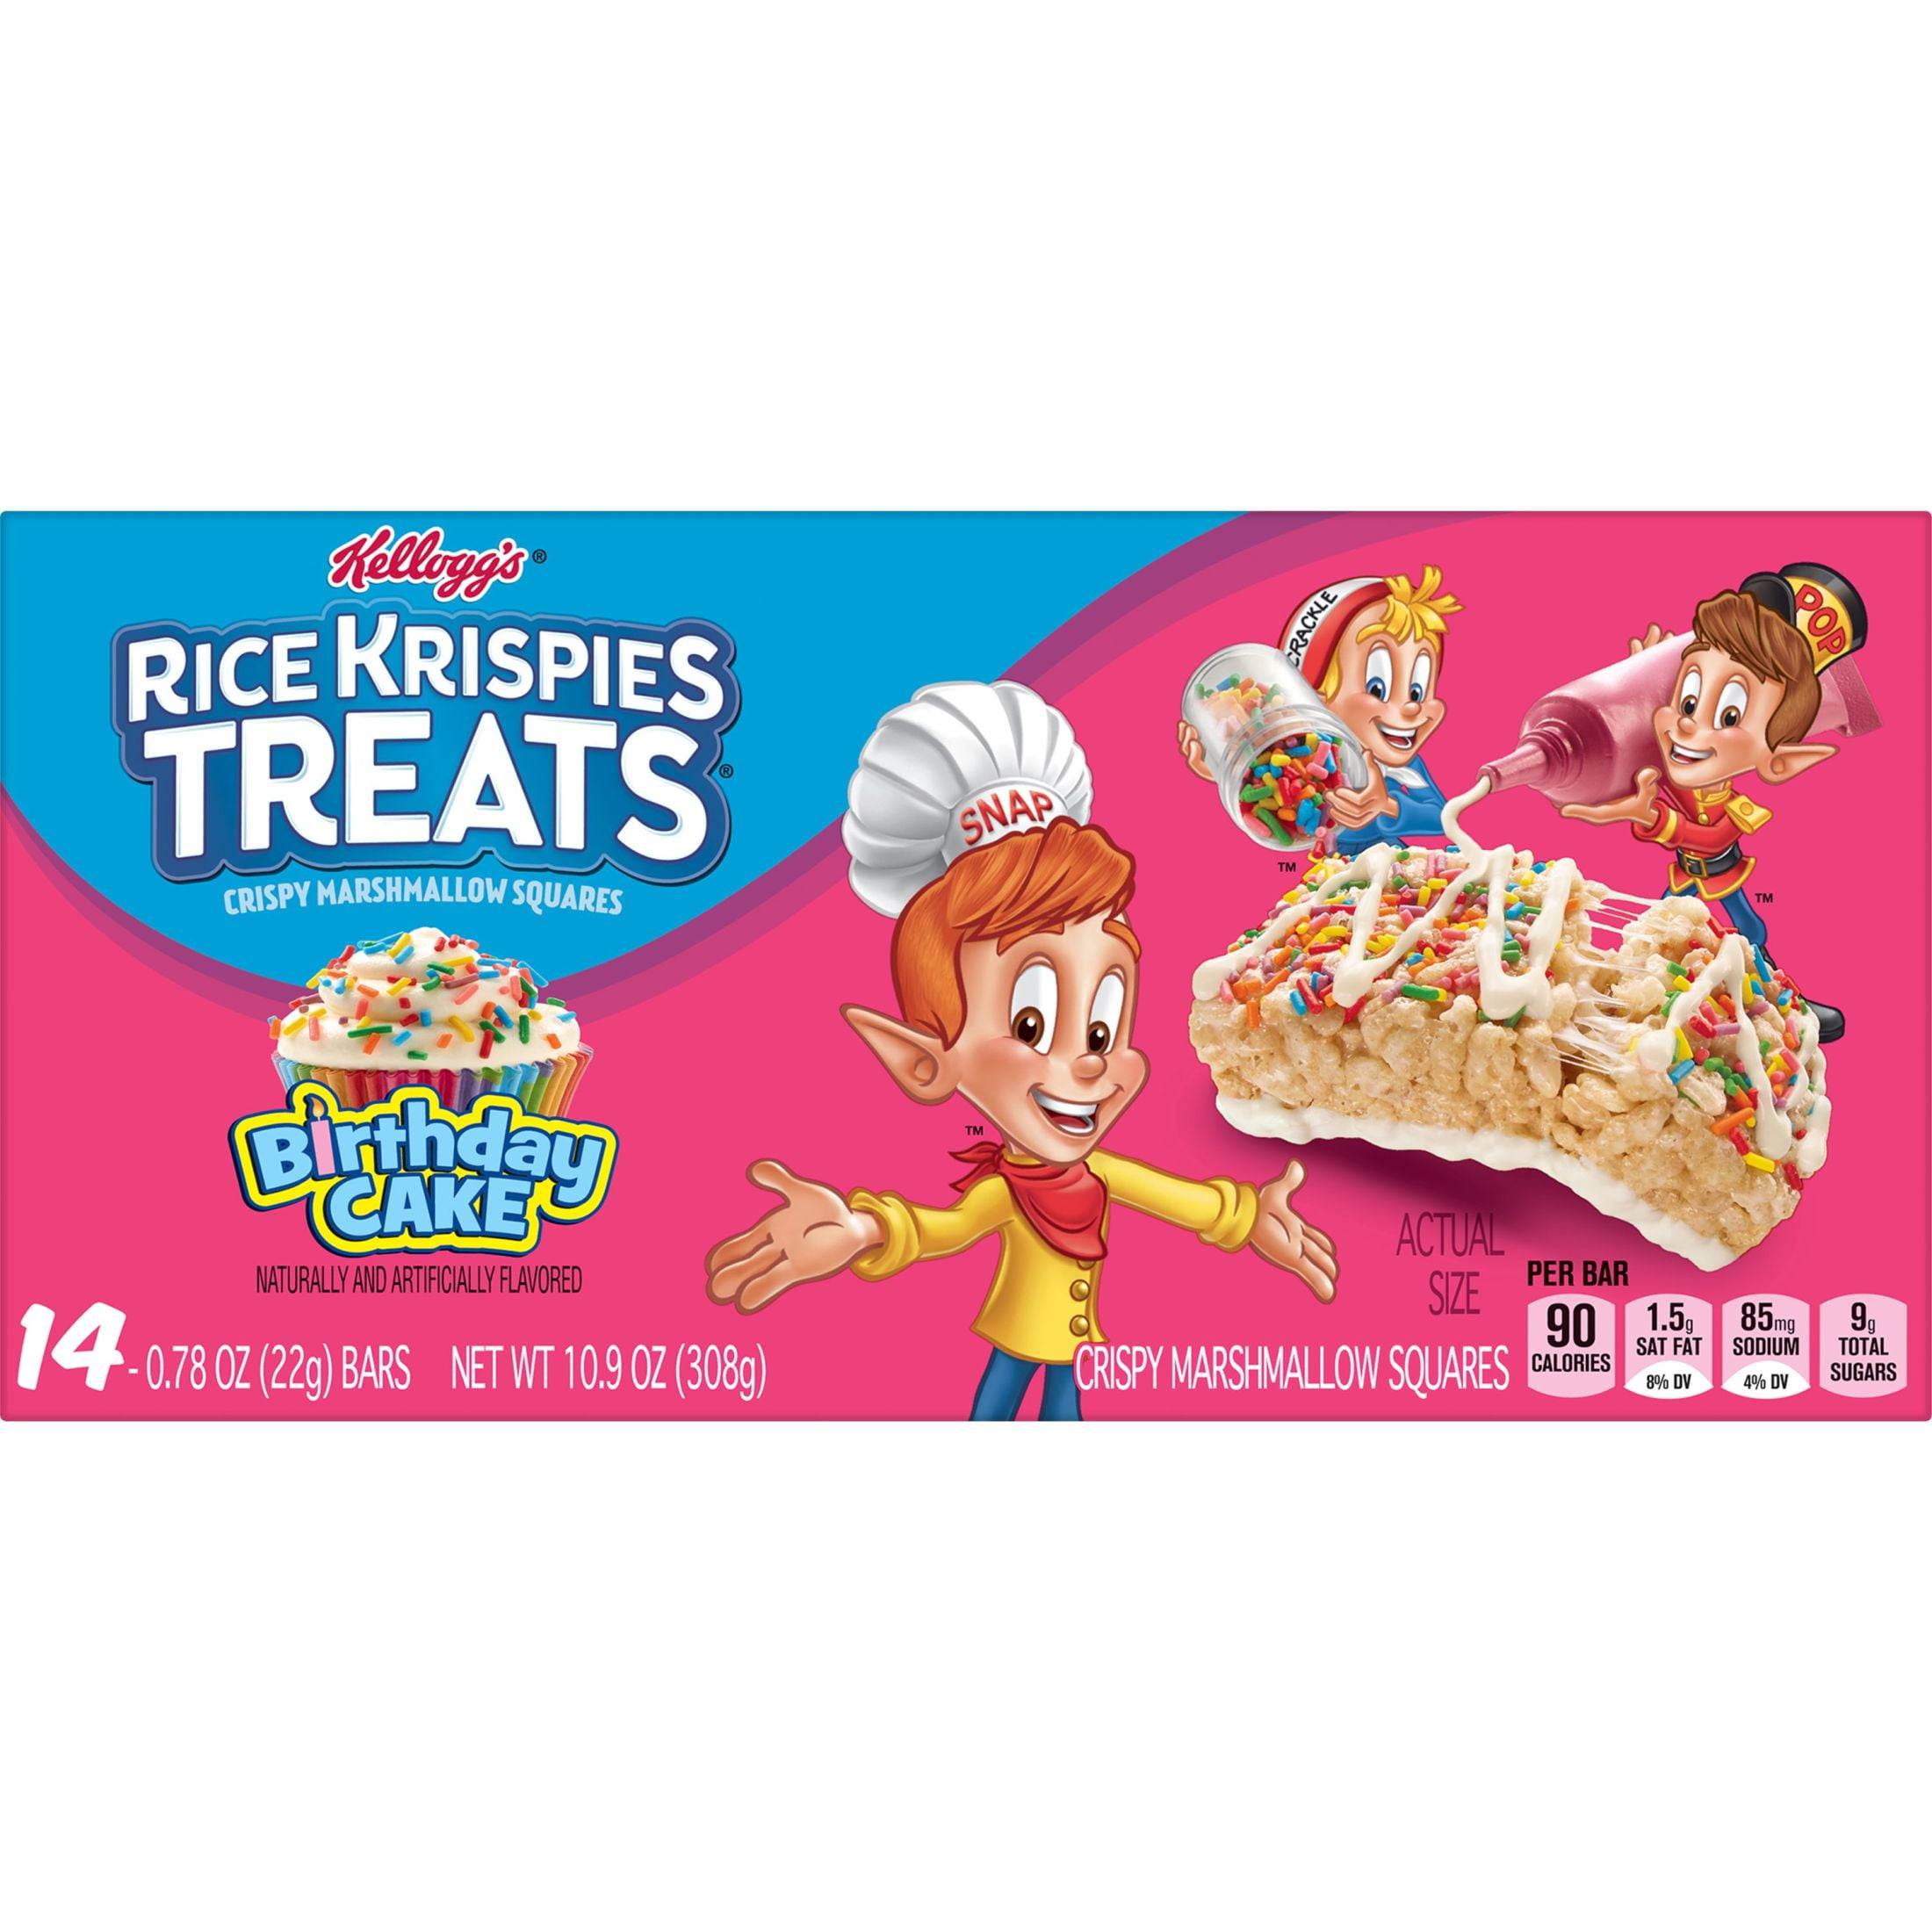 Rice Krispies Treats Birthday Cake Chewy Marshmallow Snack Bars, 10.9 oz, 14 Count - Walmart.com